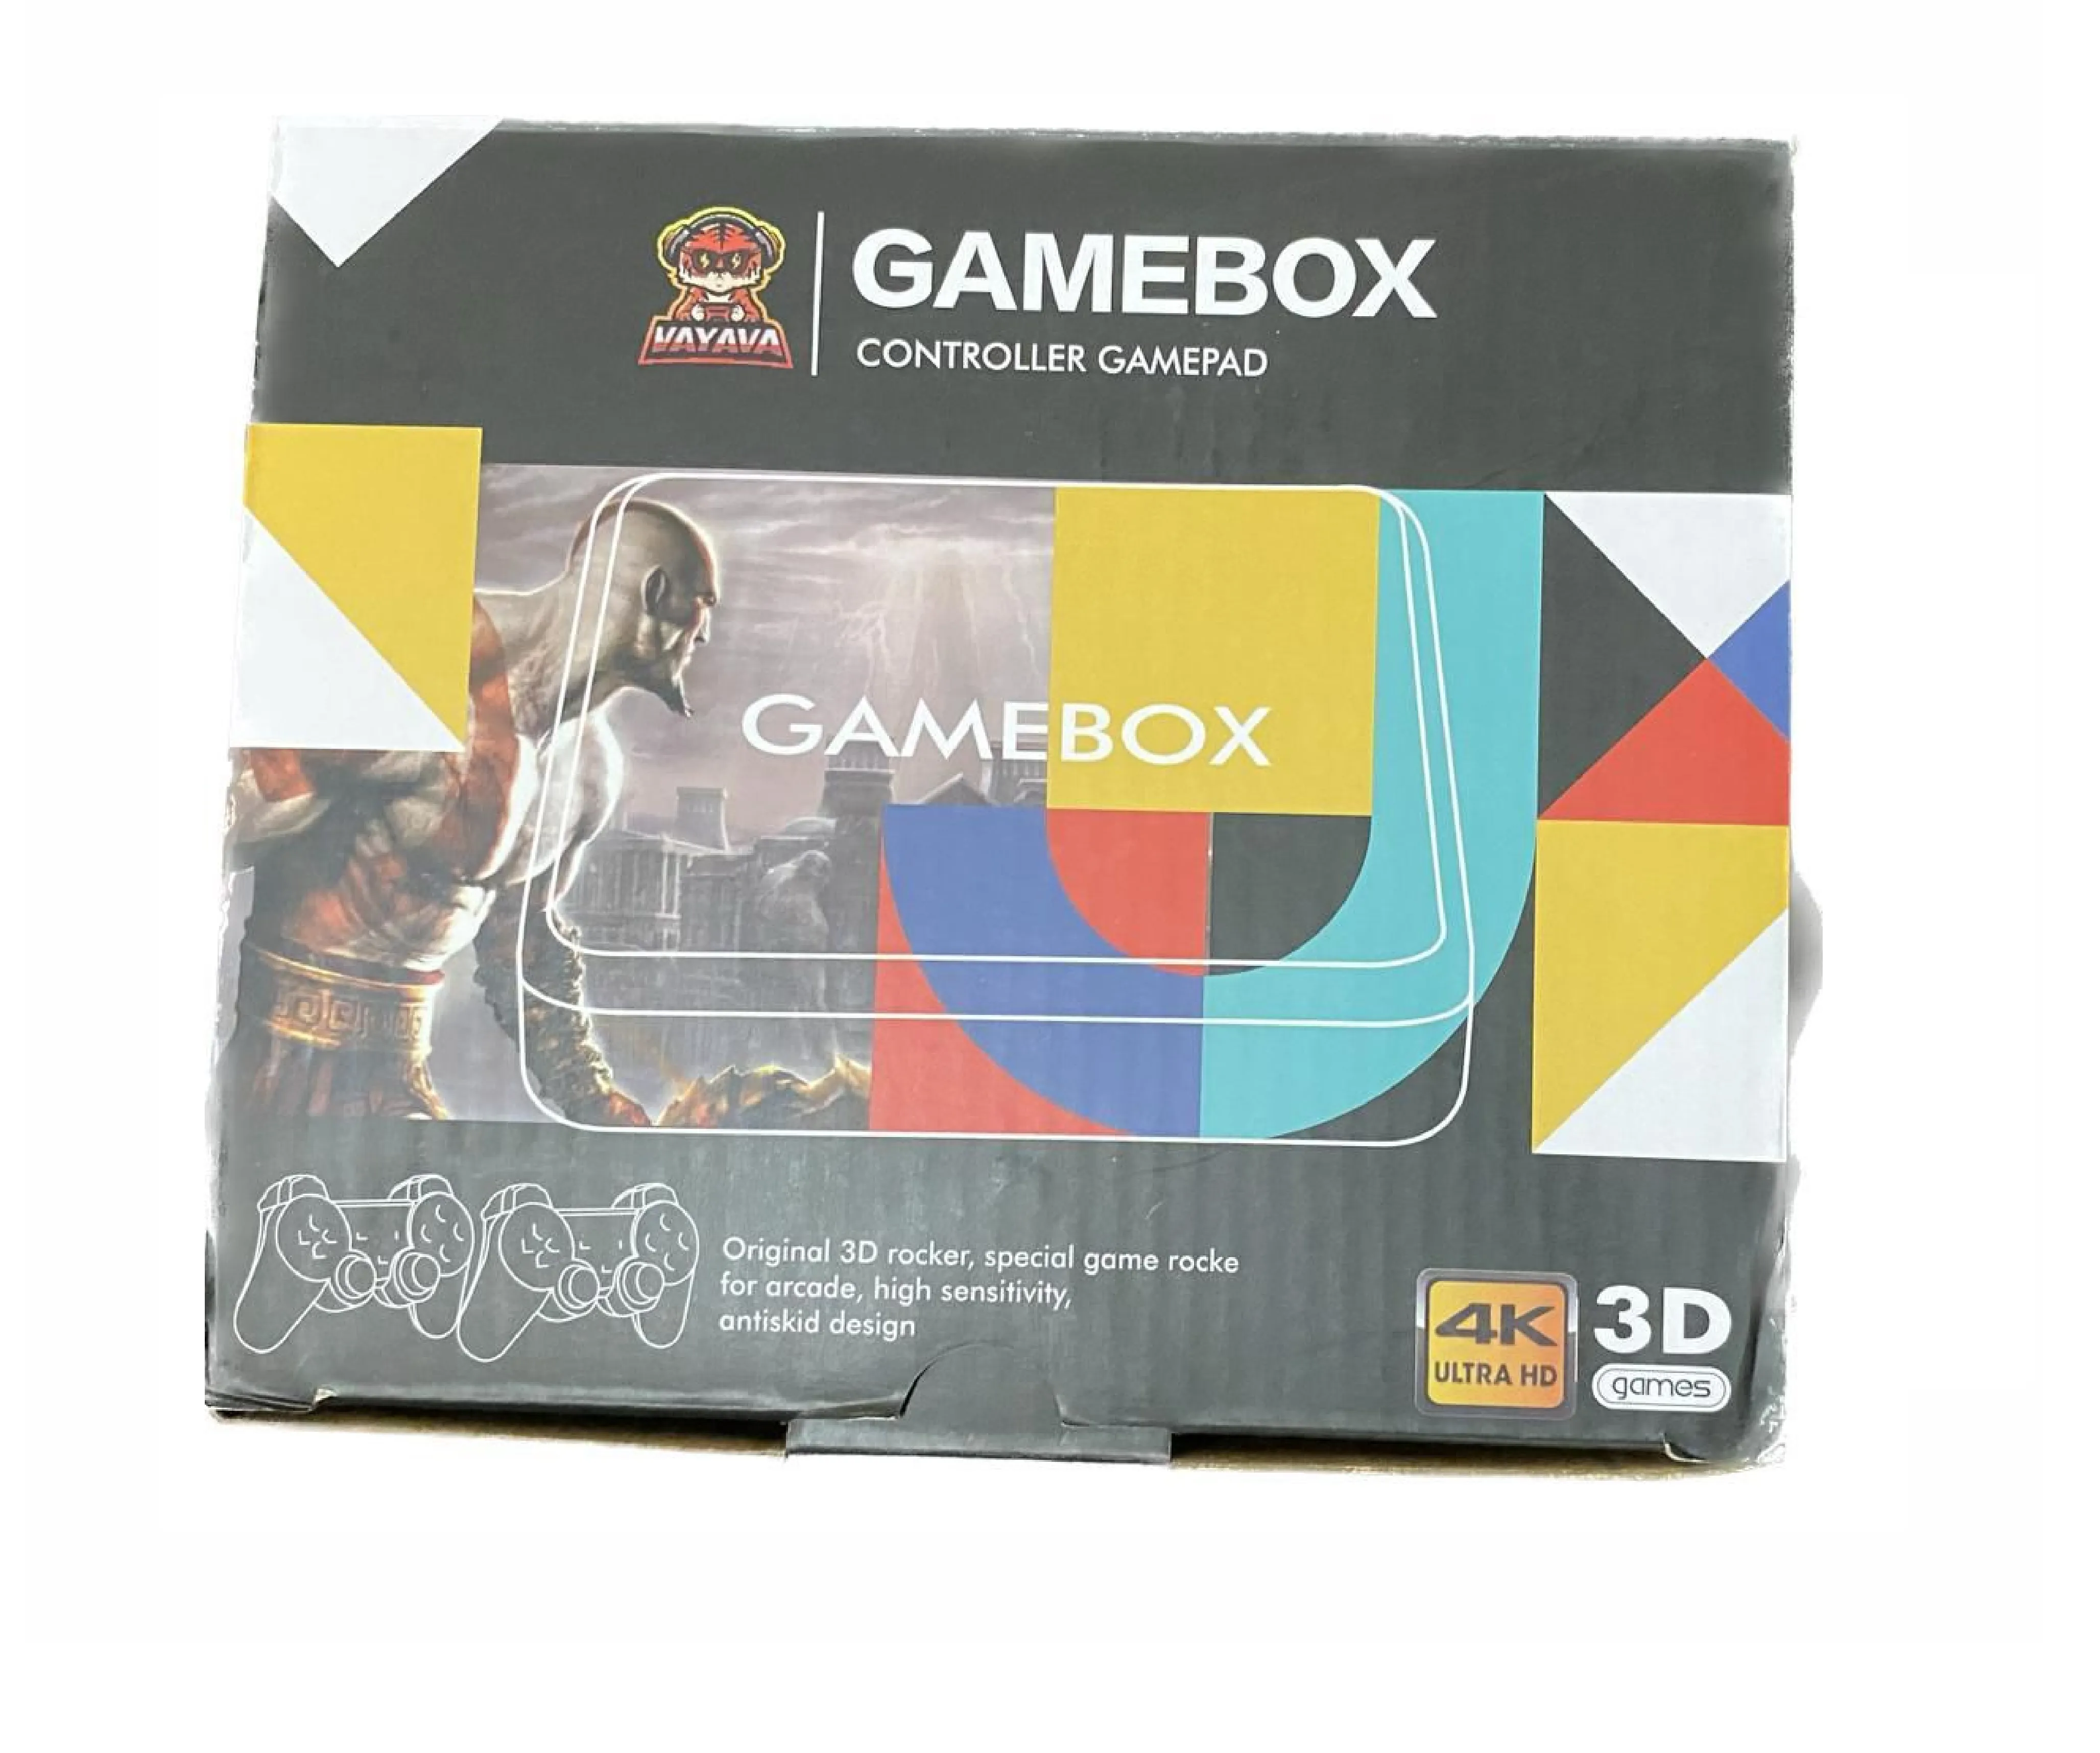 Consola Game box 4k ULTRA HD / 3D GAMES